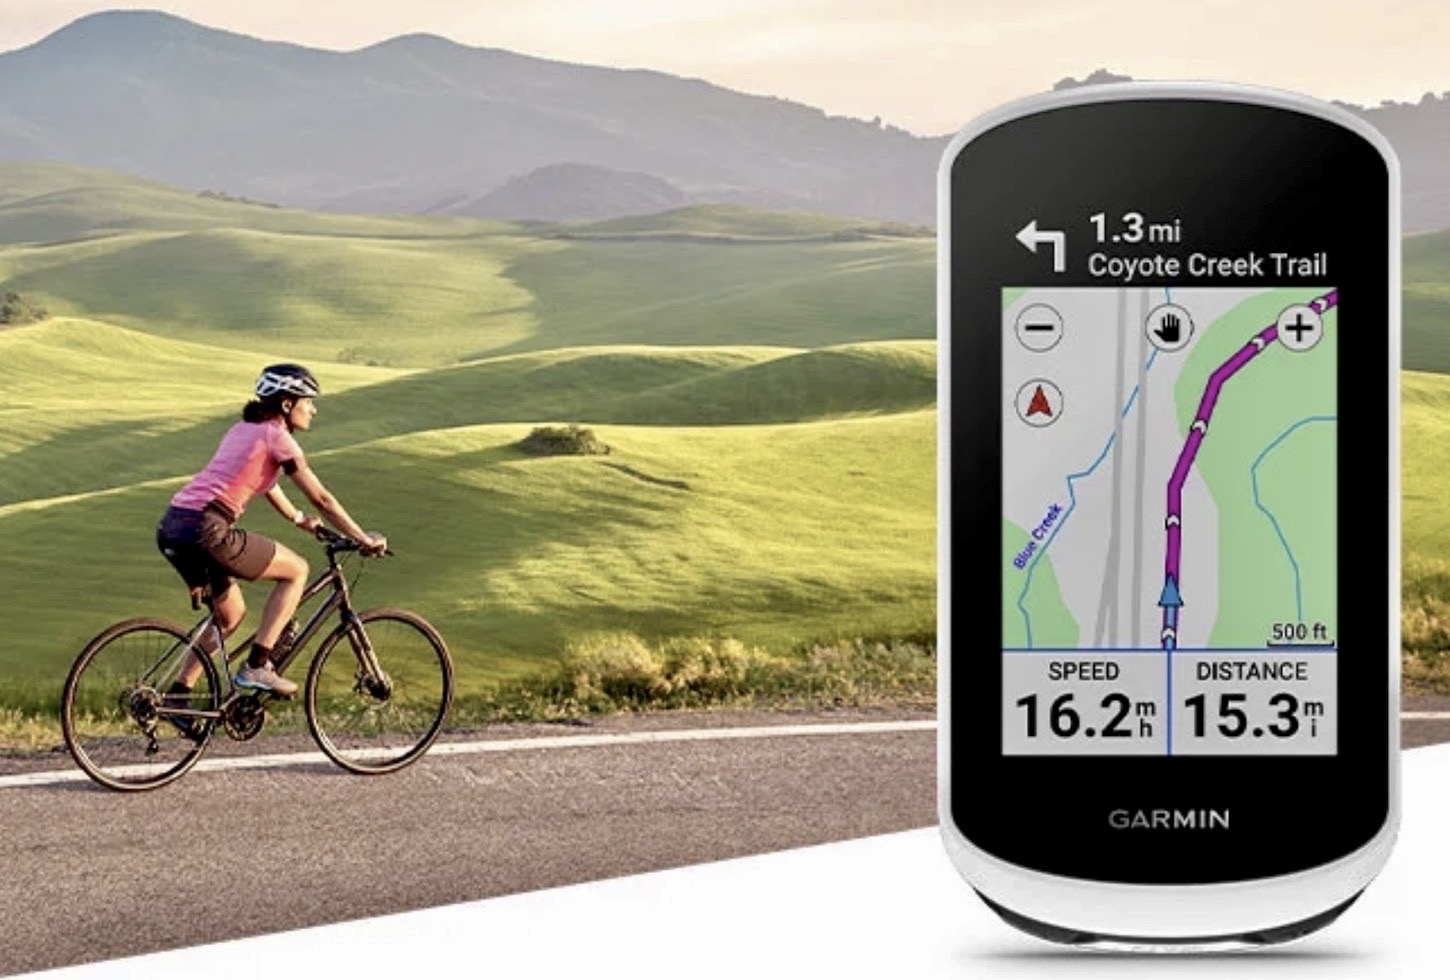 Garmin Edge Explore 2, Easy-to-Use GPS Cycling 3in Touchscreen Navigator  with Power Bank Bundle 